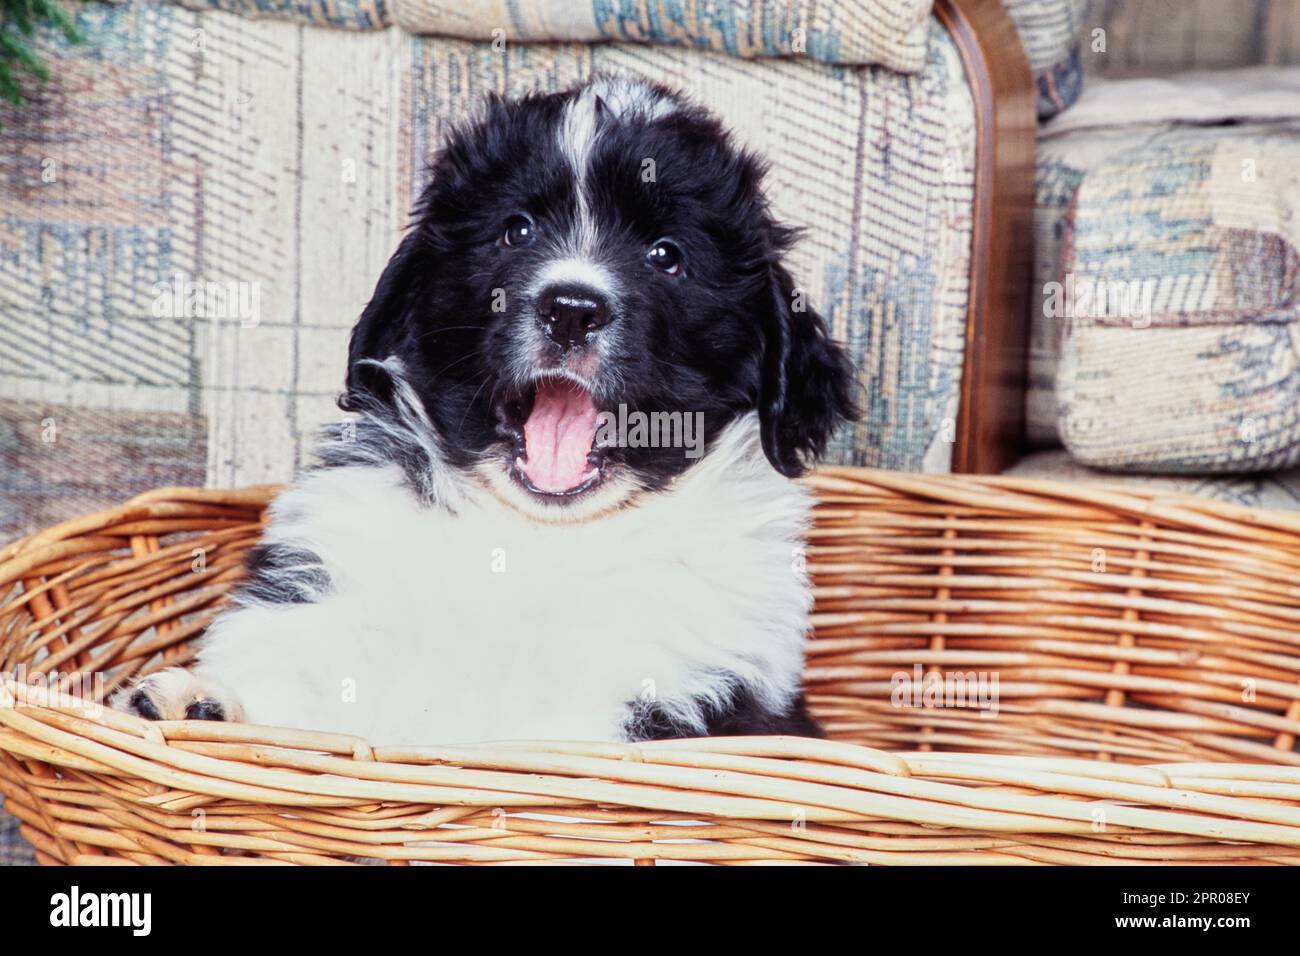 Newfoundland sitting in wicker basket near couch yawning Stock Photo